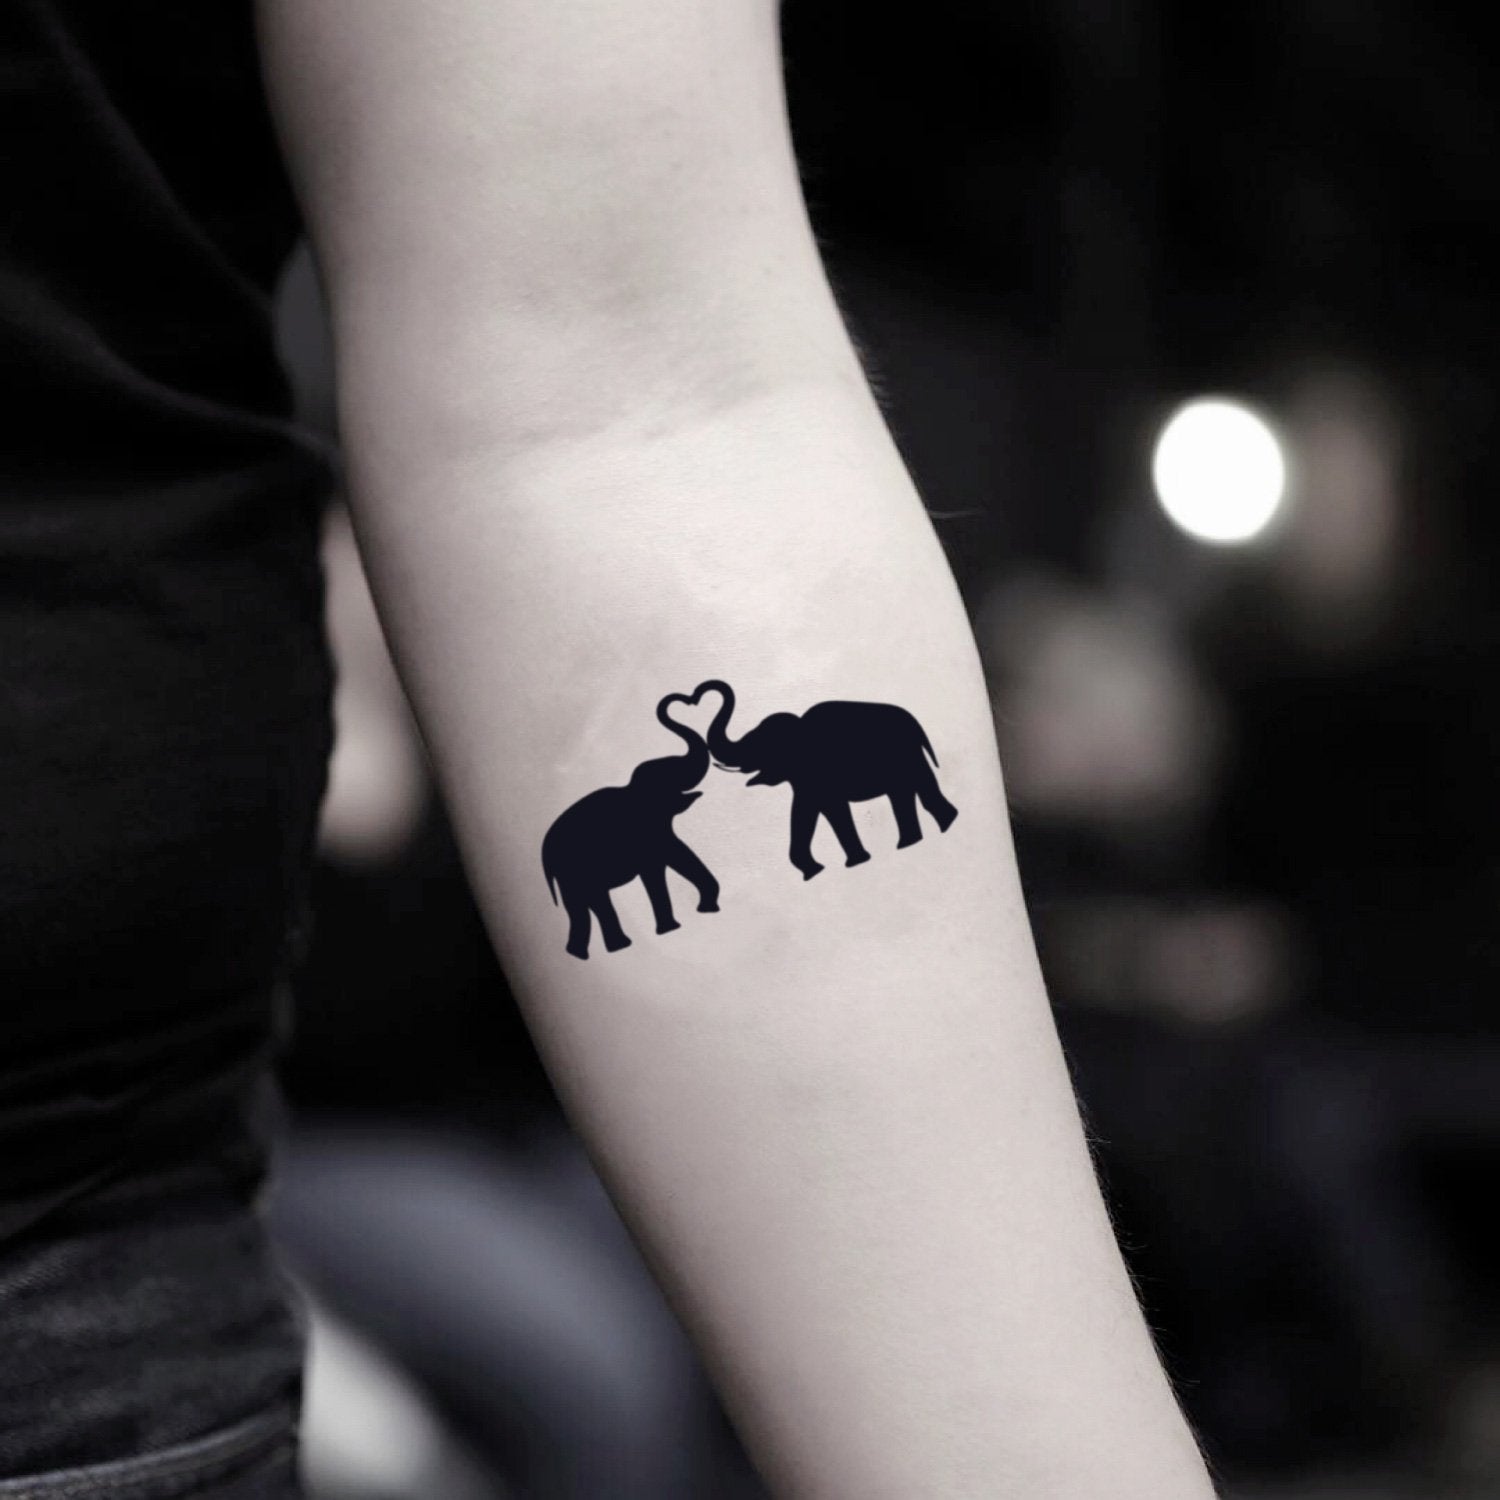 fake small elephant heart animal temporary tattoo sticker design idea on inner arm